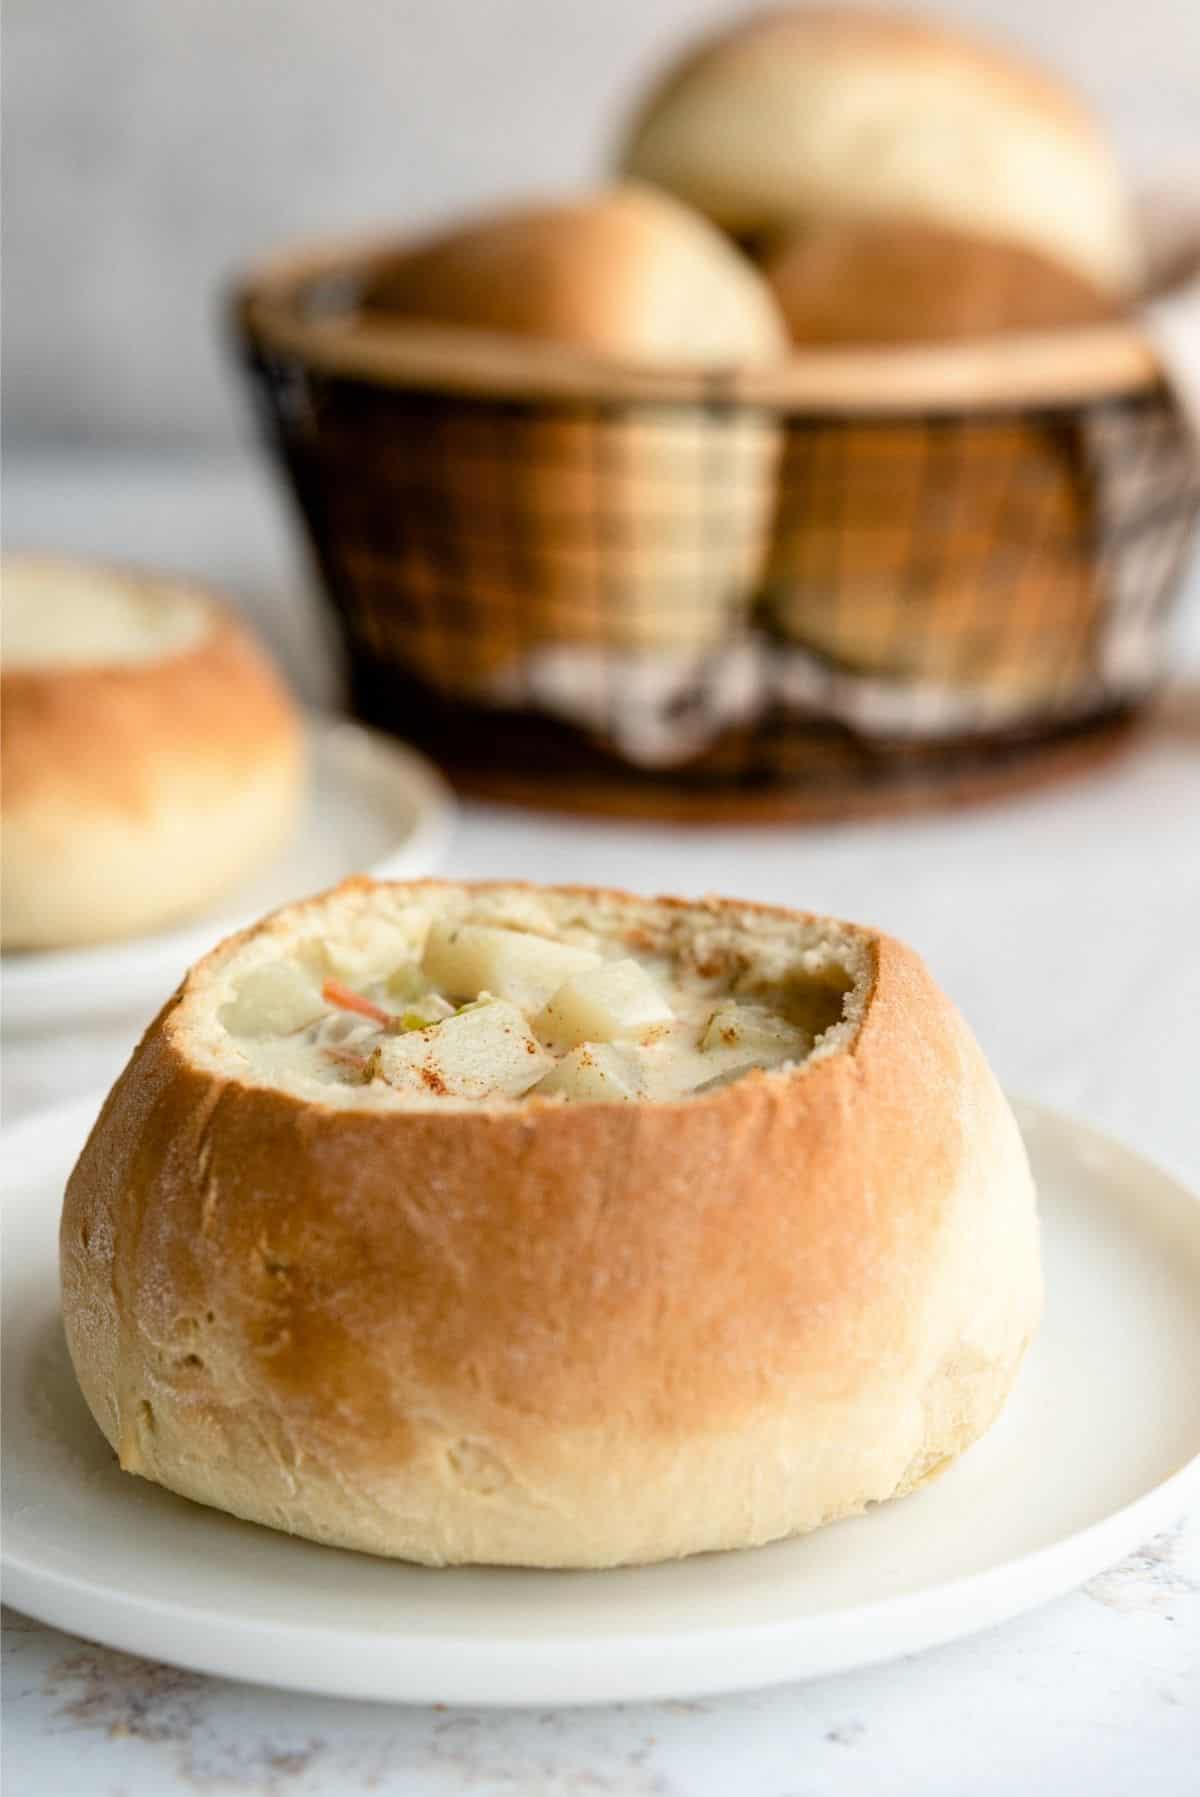 https://www.sixsistersstuff.com/wp-content/uploads/2013/02/Homemade-Bread-Bowls.jpg